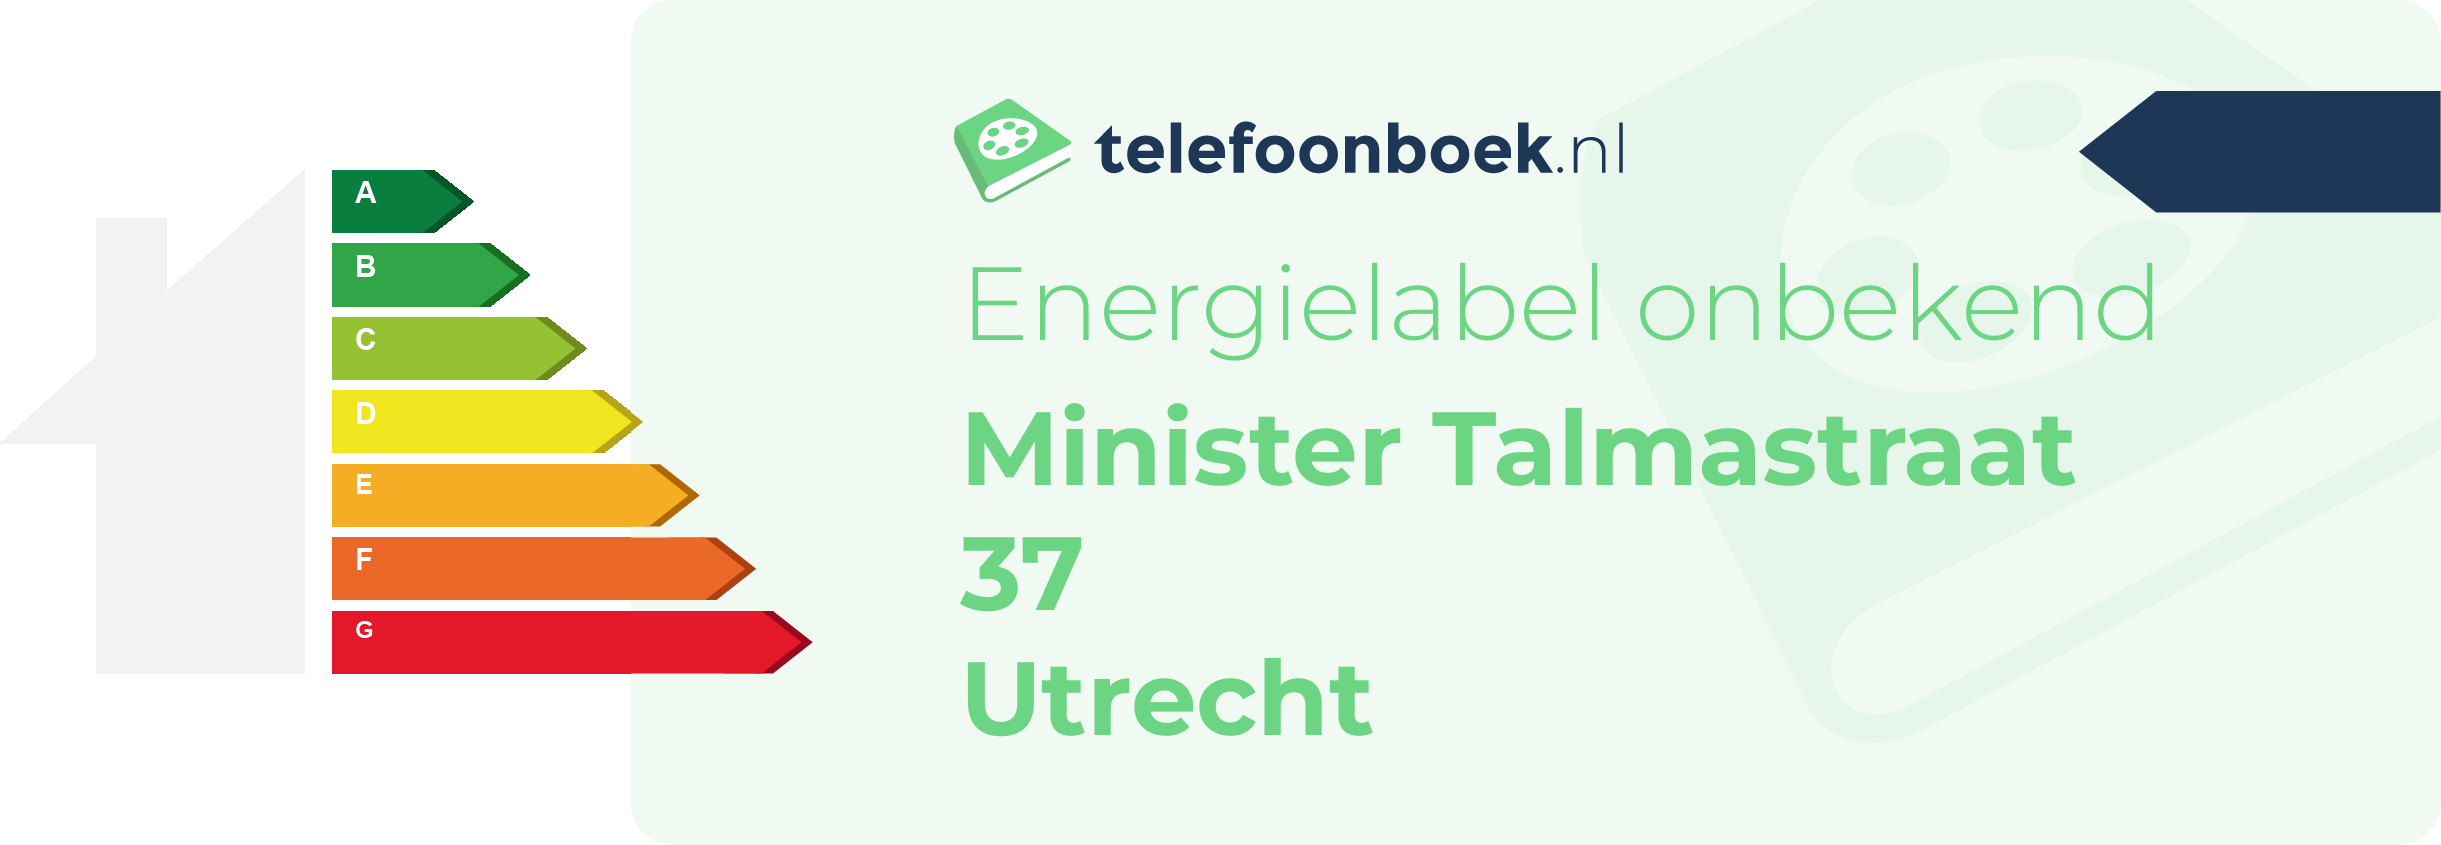 Energielabel Minister Talmastraat 37 Utrecht